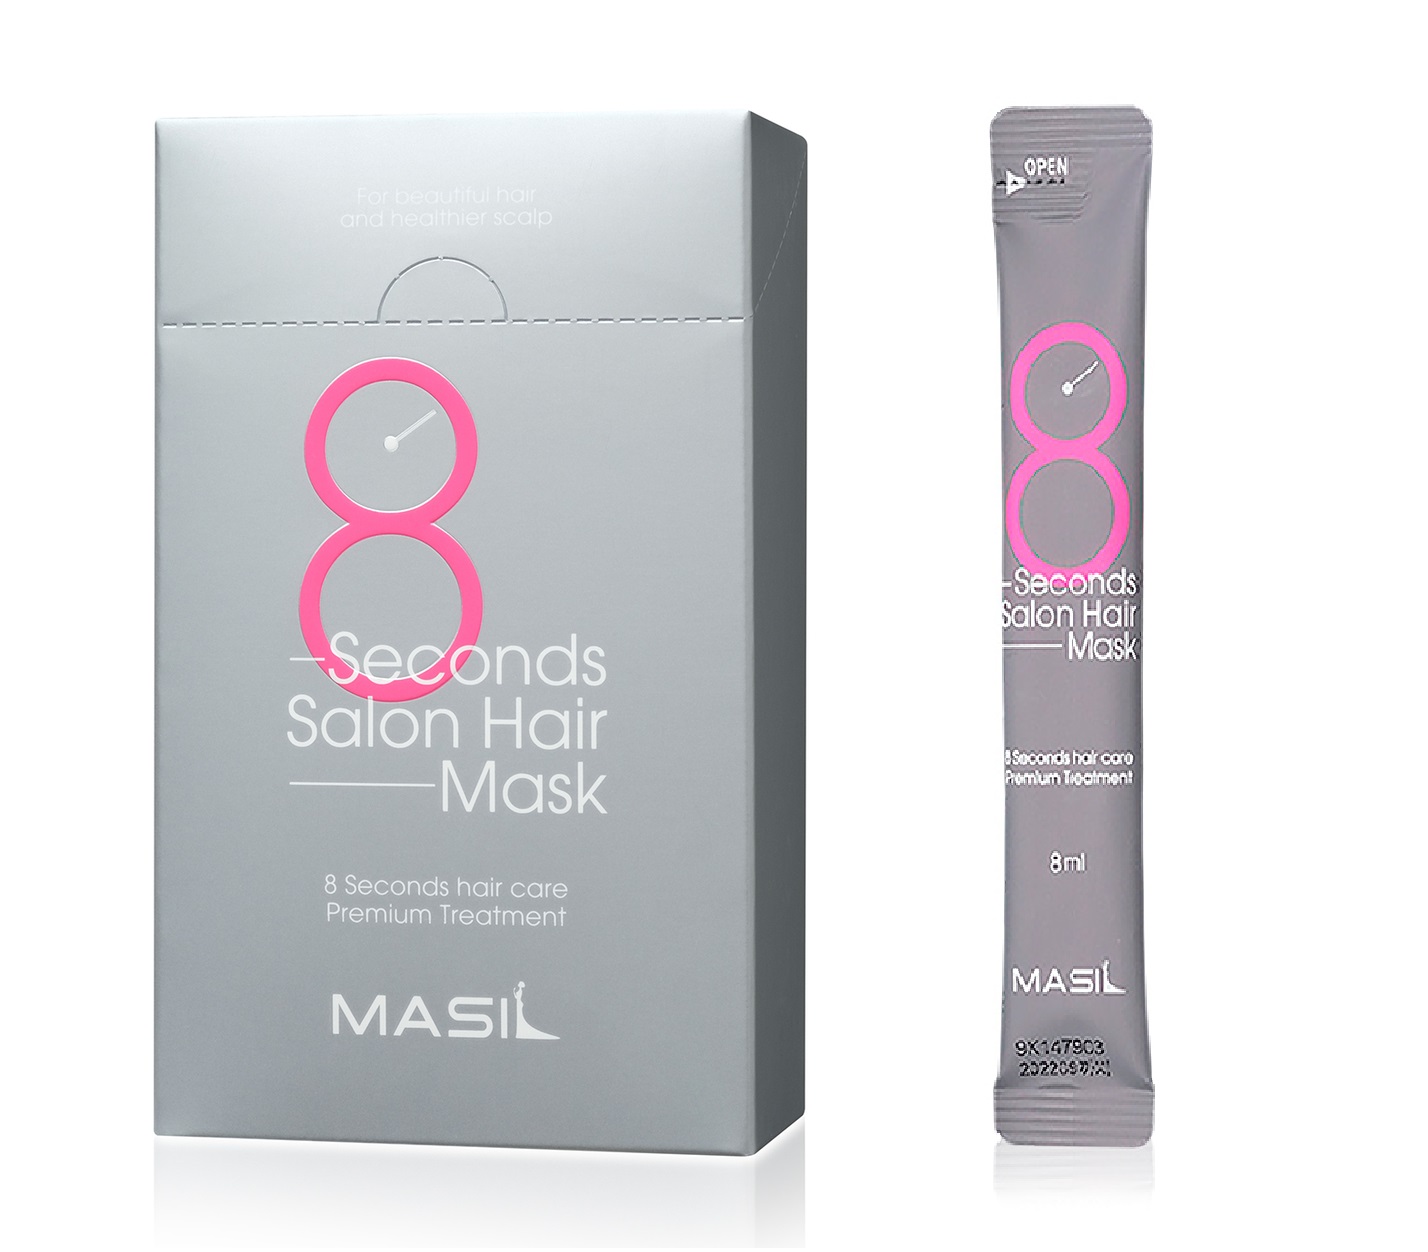 Маска 8 секунд отзывы. Masil маска для волос салонный эффект за 8 секунд, 8 мл*20 шт. Masil маска 8 секунд. Маска 8 секунд Корея. Masil маска для волос салонный эффект за 8 секунд - 8 seconds Salon hair Mask, 100мл.